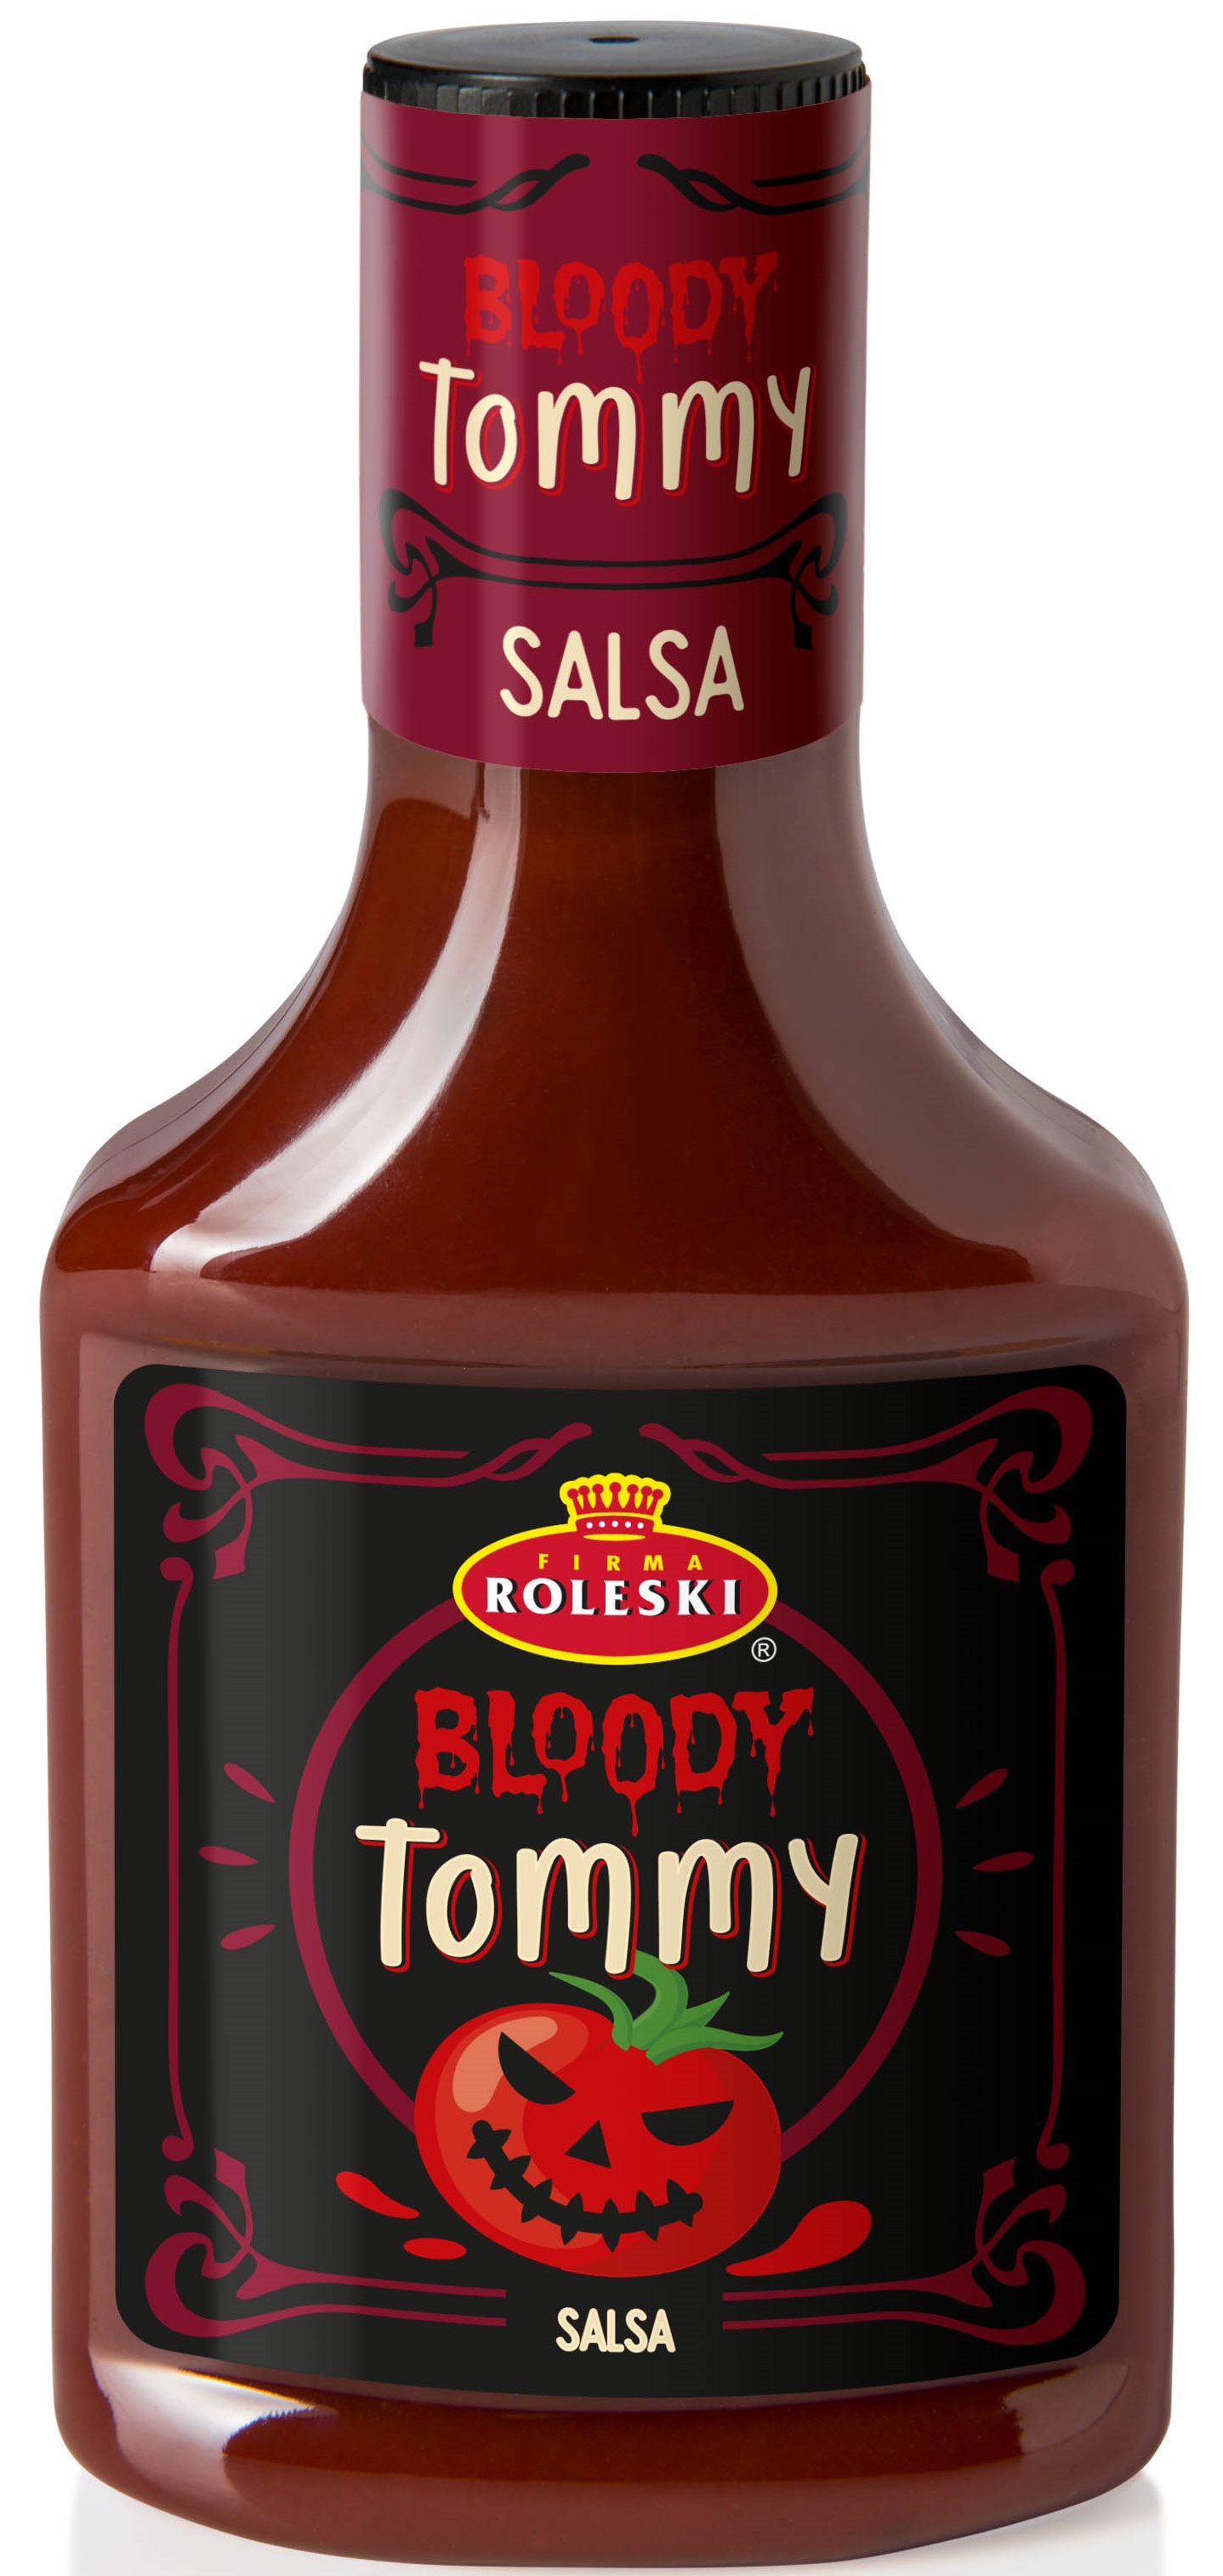 Roleski Bloody Tommy salsa aterradora